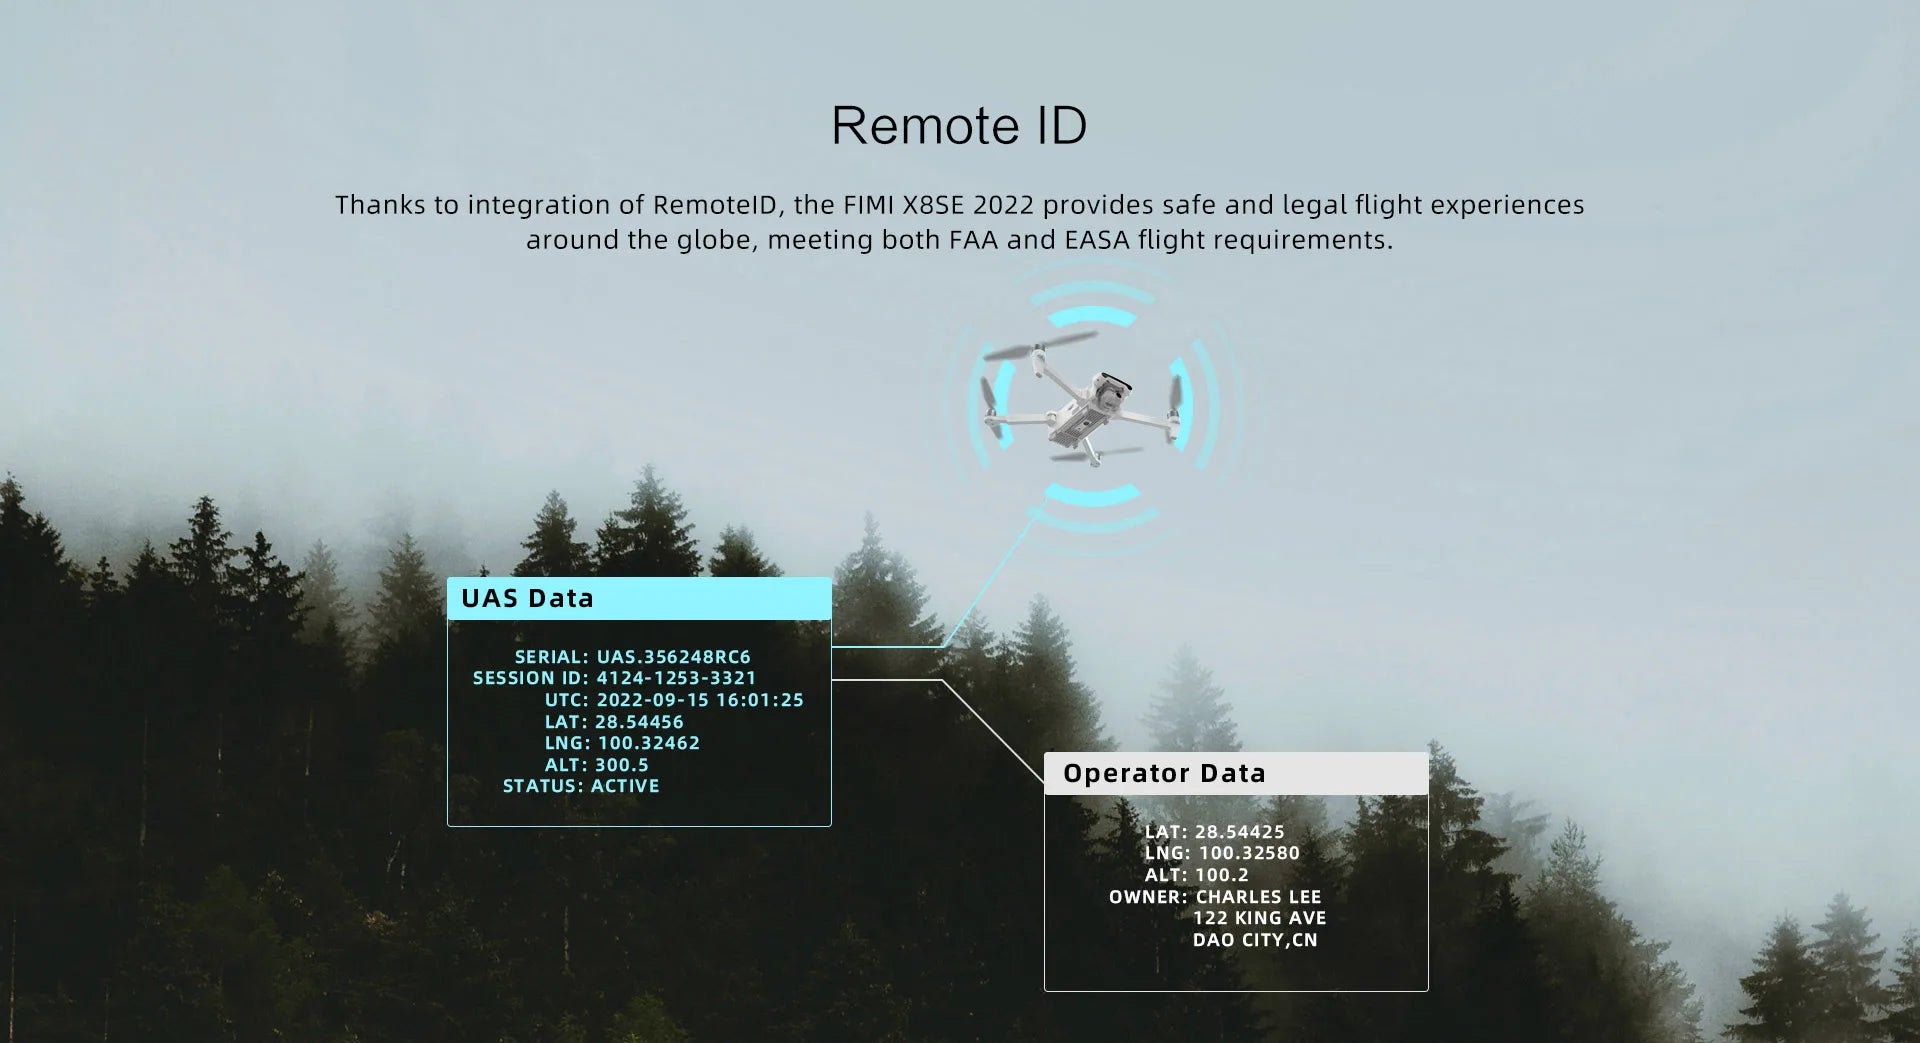 FIMI x8se 2022 V2 Camera Drone, FIMI X8SE 2022 provides safe and legal flight experiences around the globe 